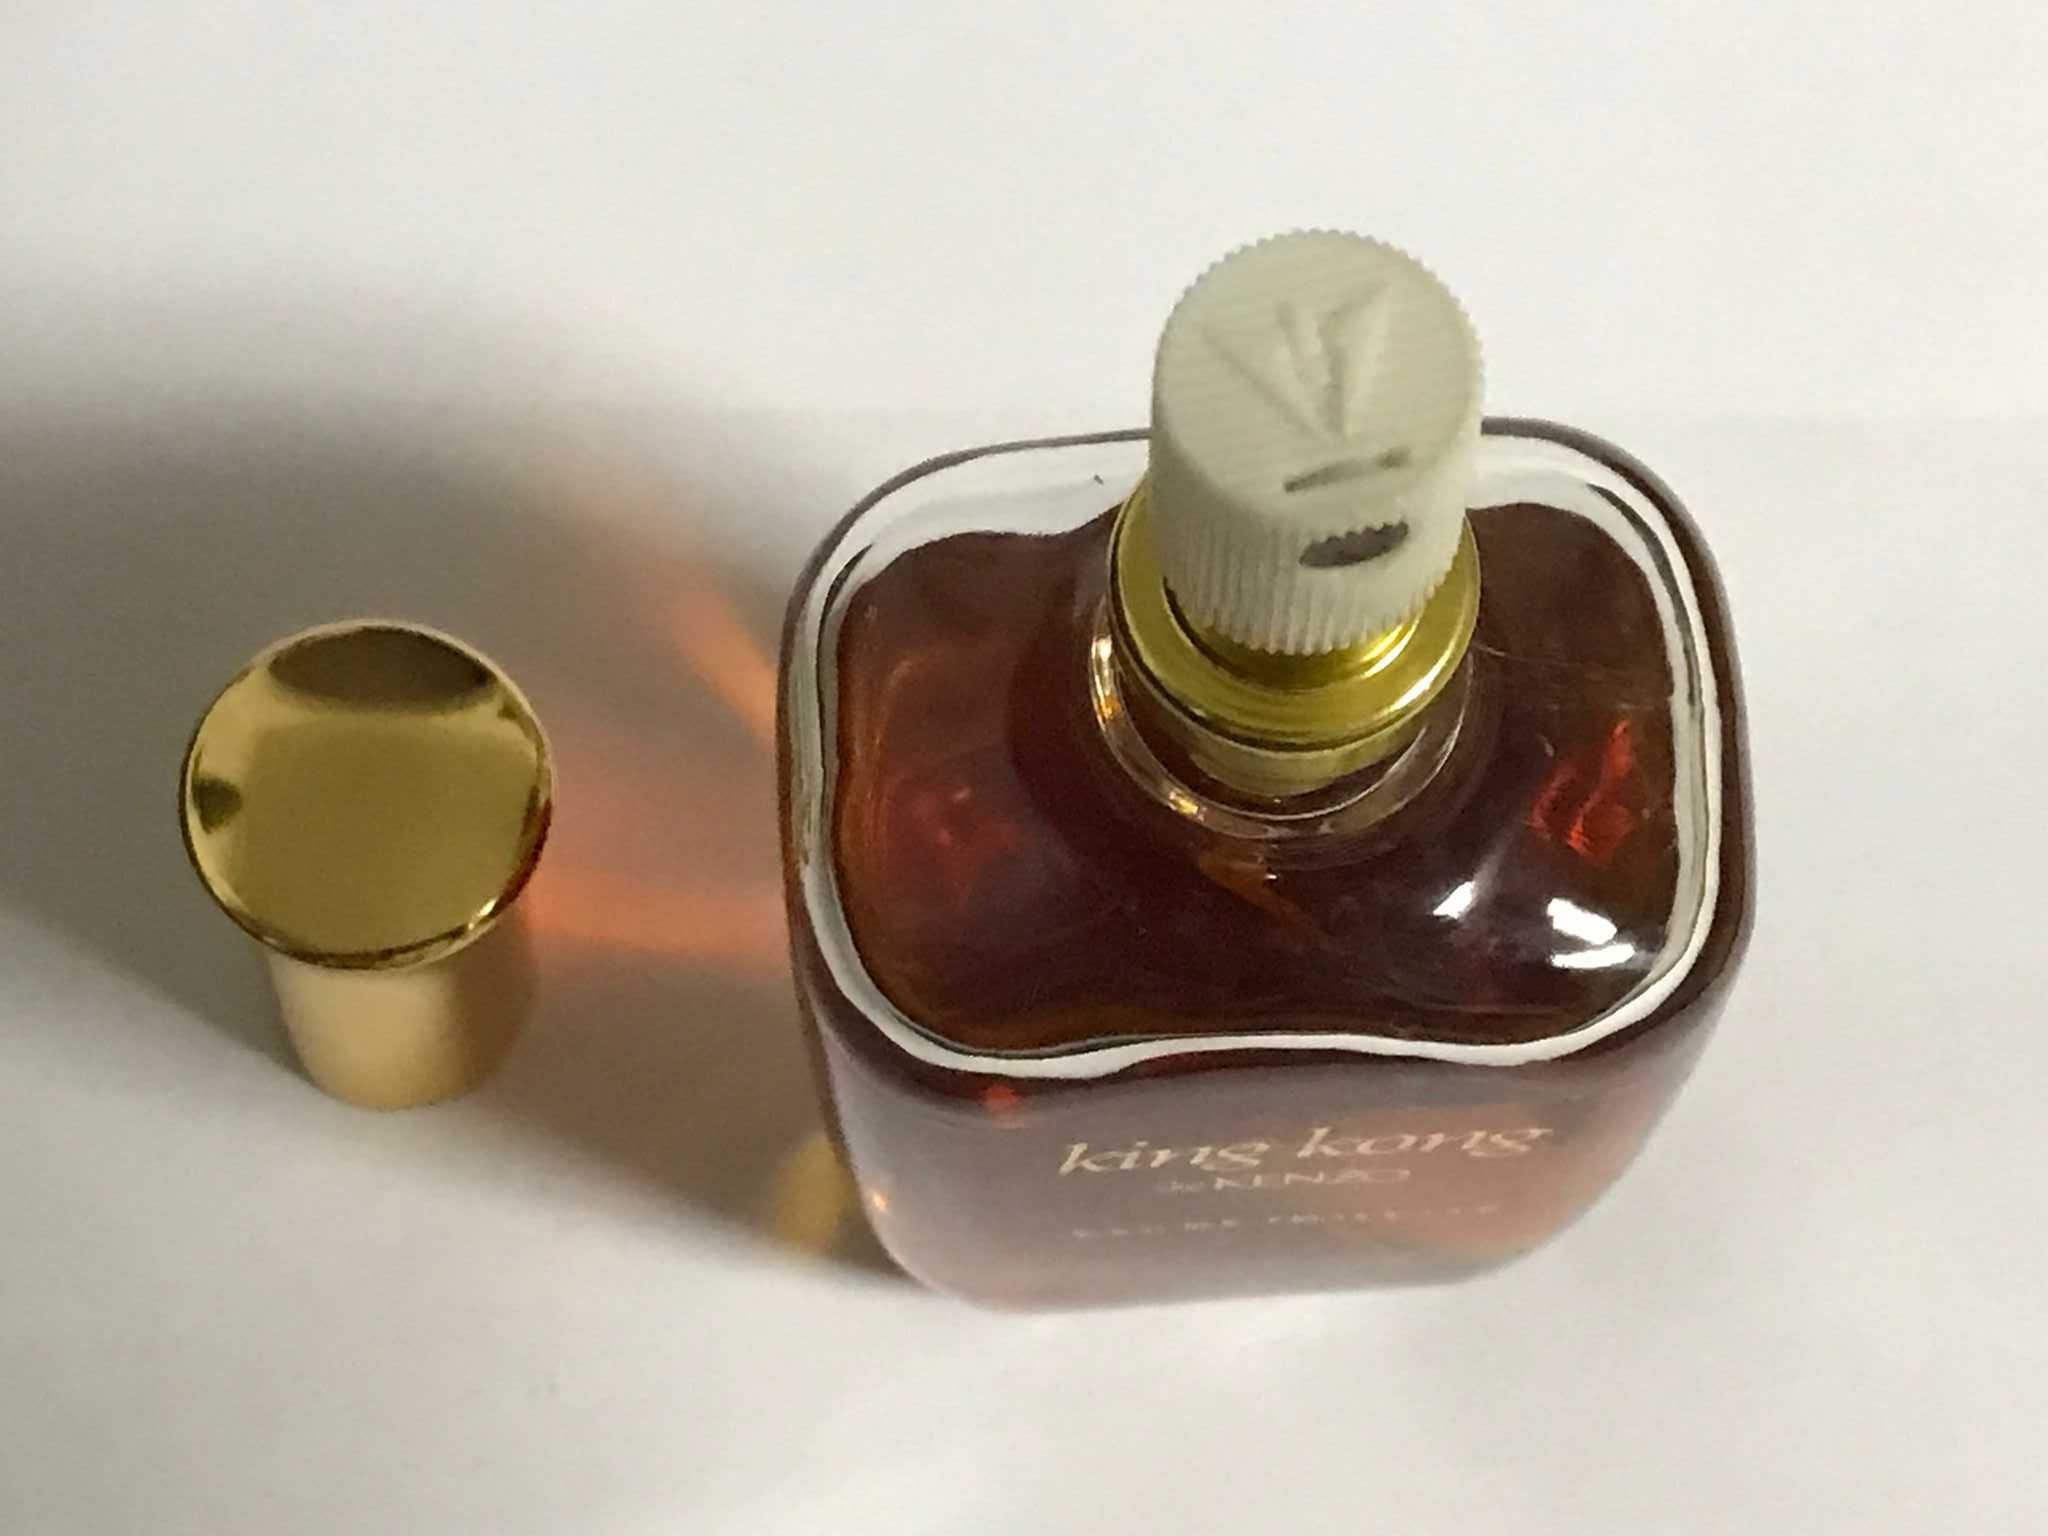 Parfum de Kenzo King Kong Vintage